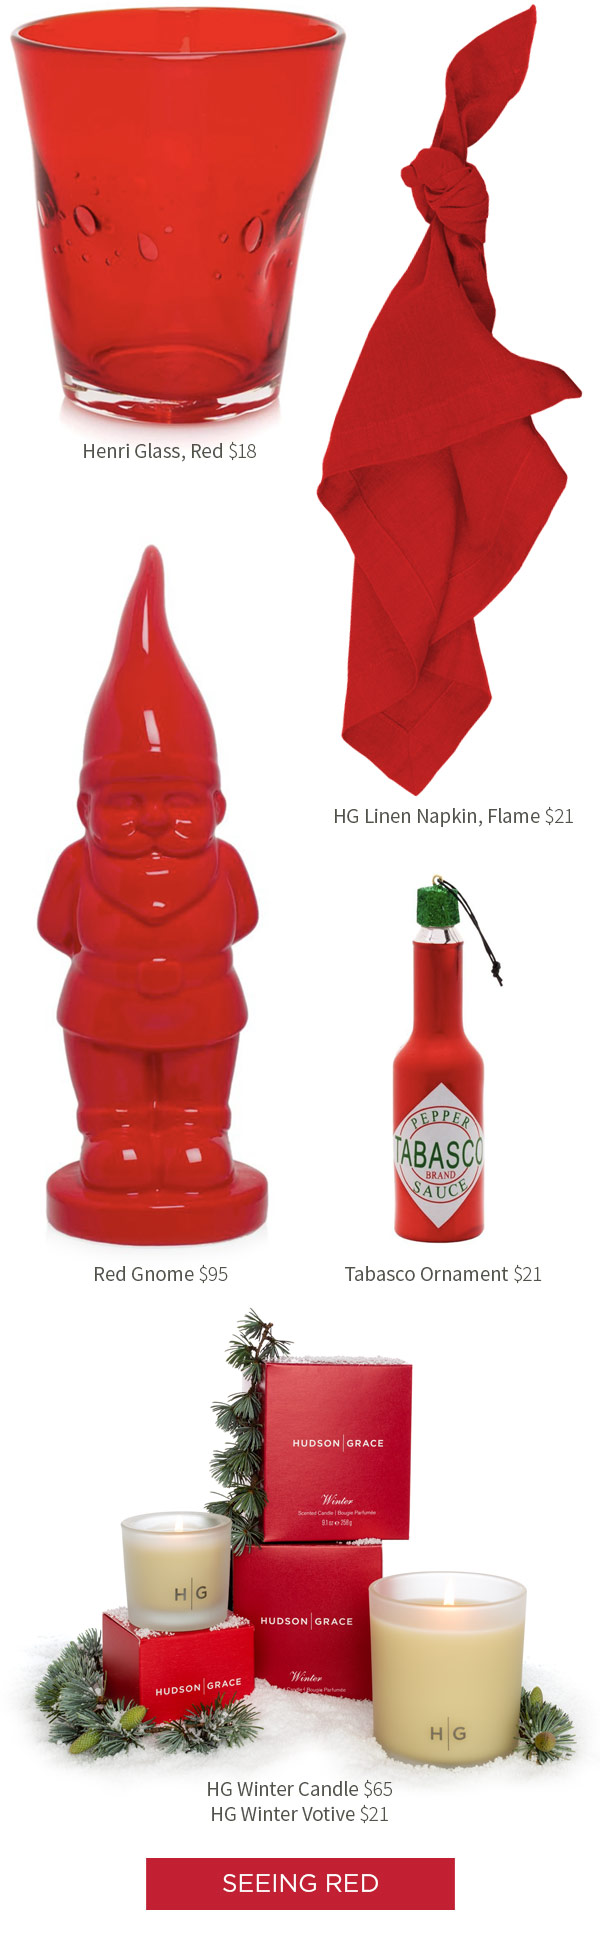 Henri Glass, Red $18 . HG Linen Napkin, Flame $21 .?Red Gnome $95 .?Tabasco Ornament $21 .?HG Winter Candle $65 .?HG Winter Votive $21